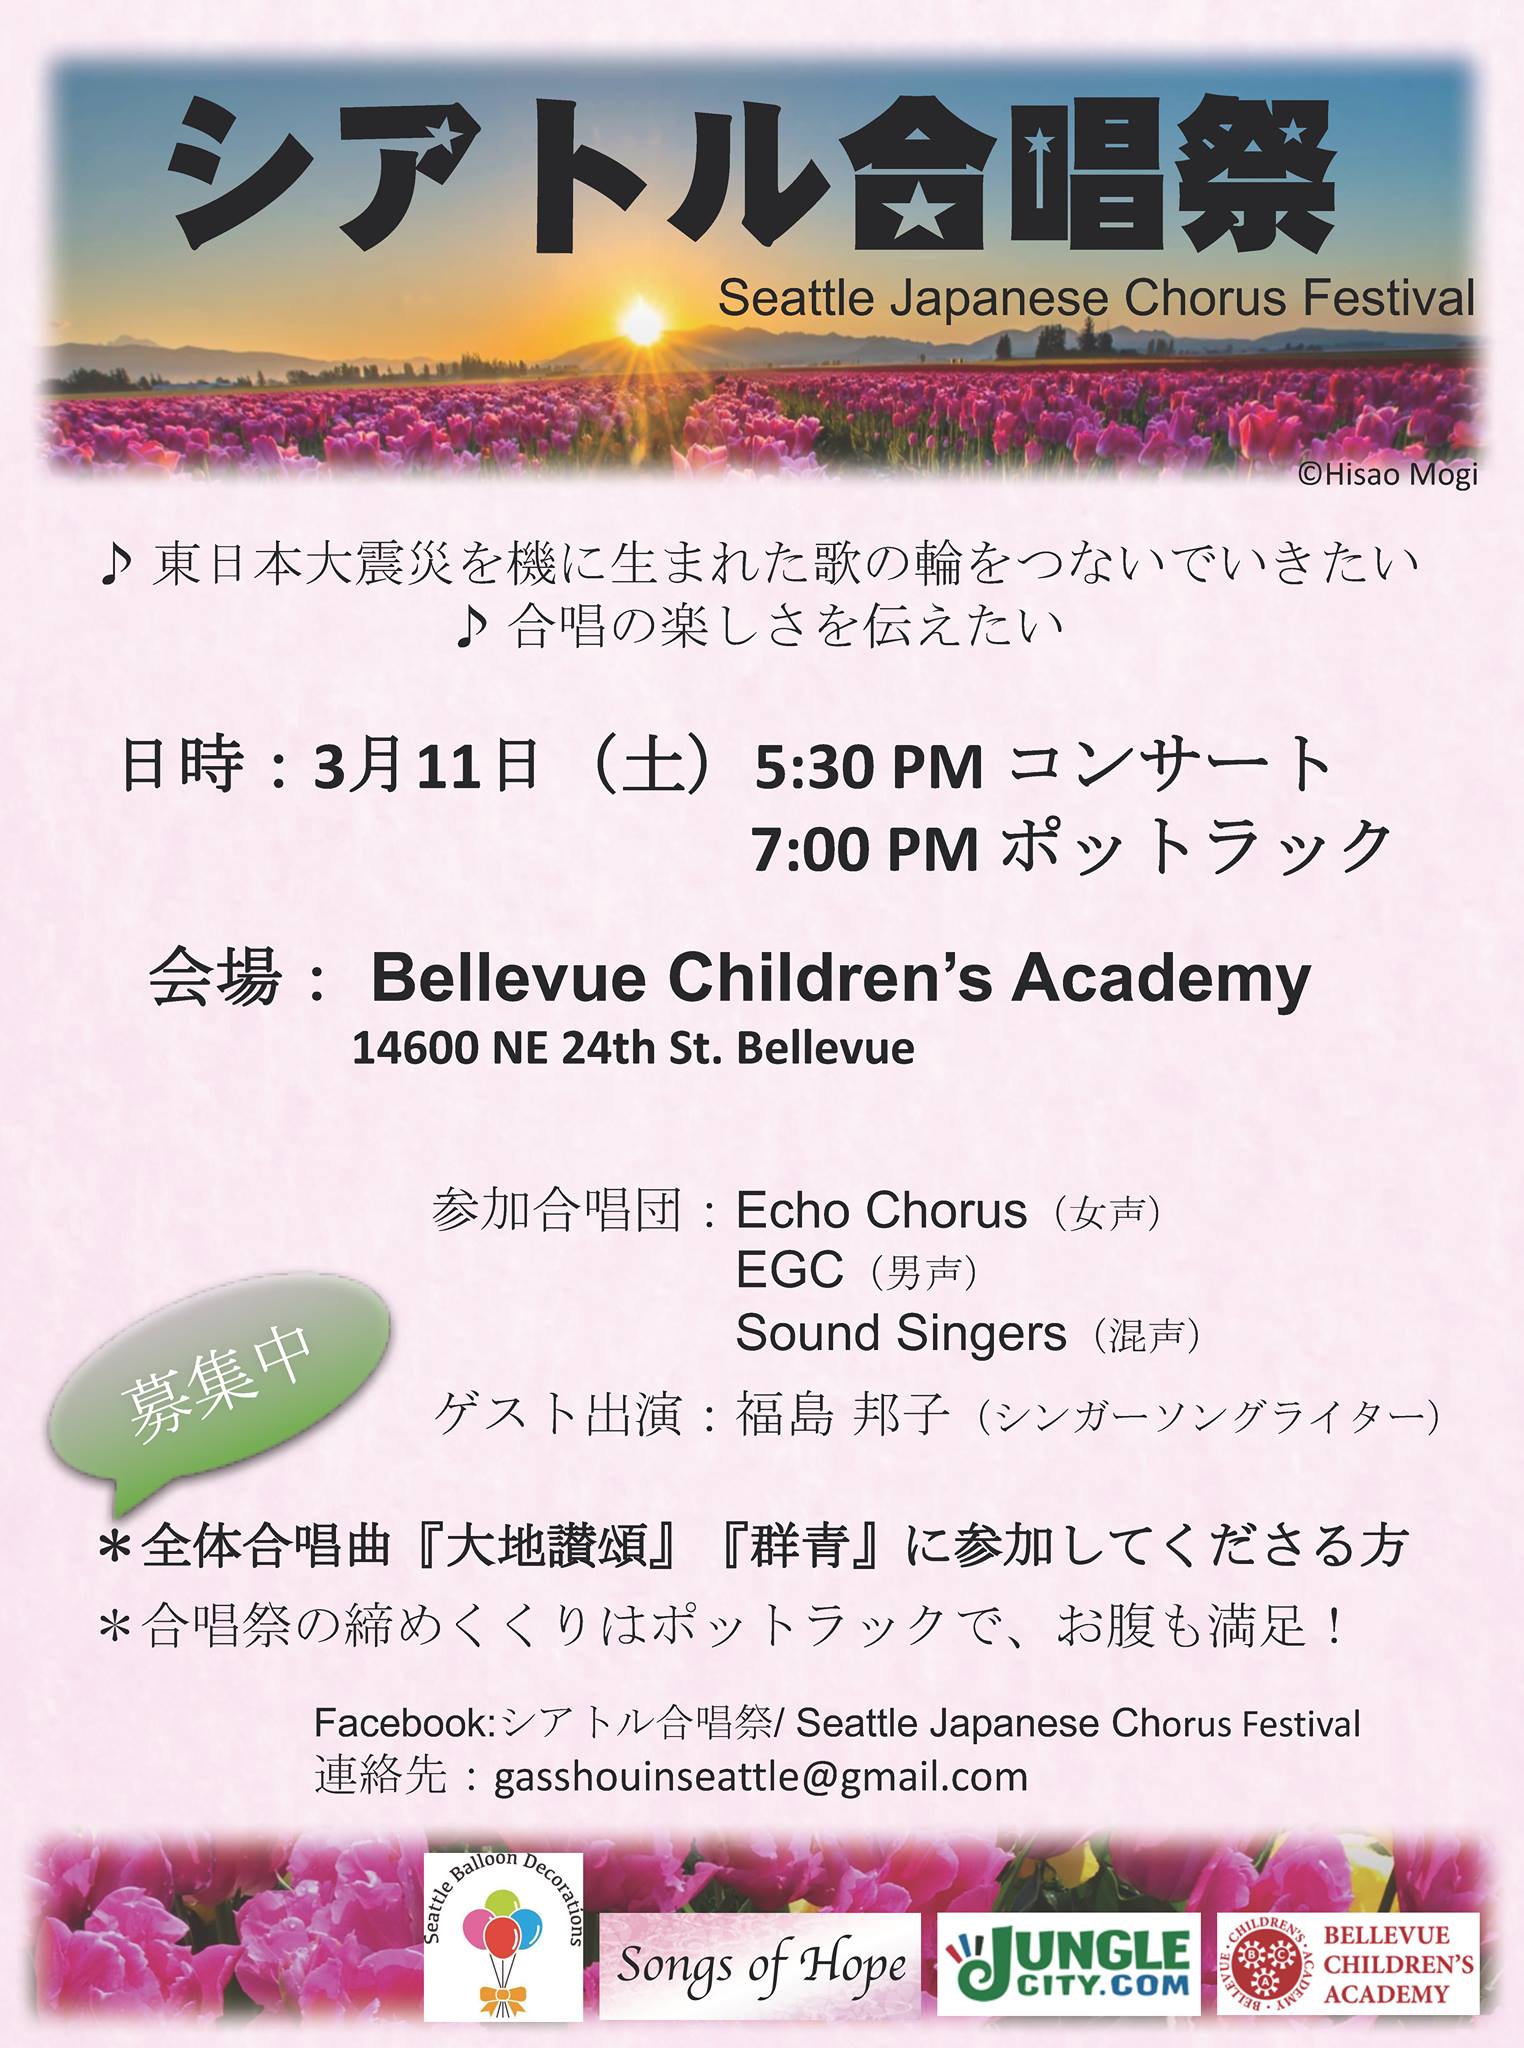 Seattle Japanese Chorus Festival Japanese Poster